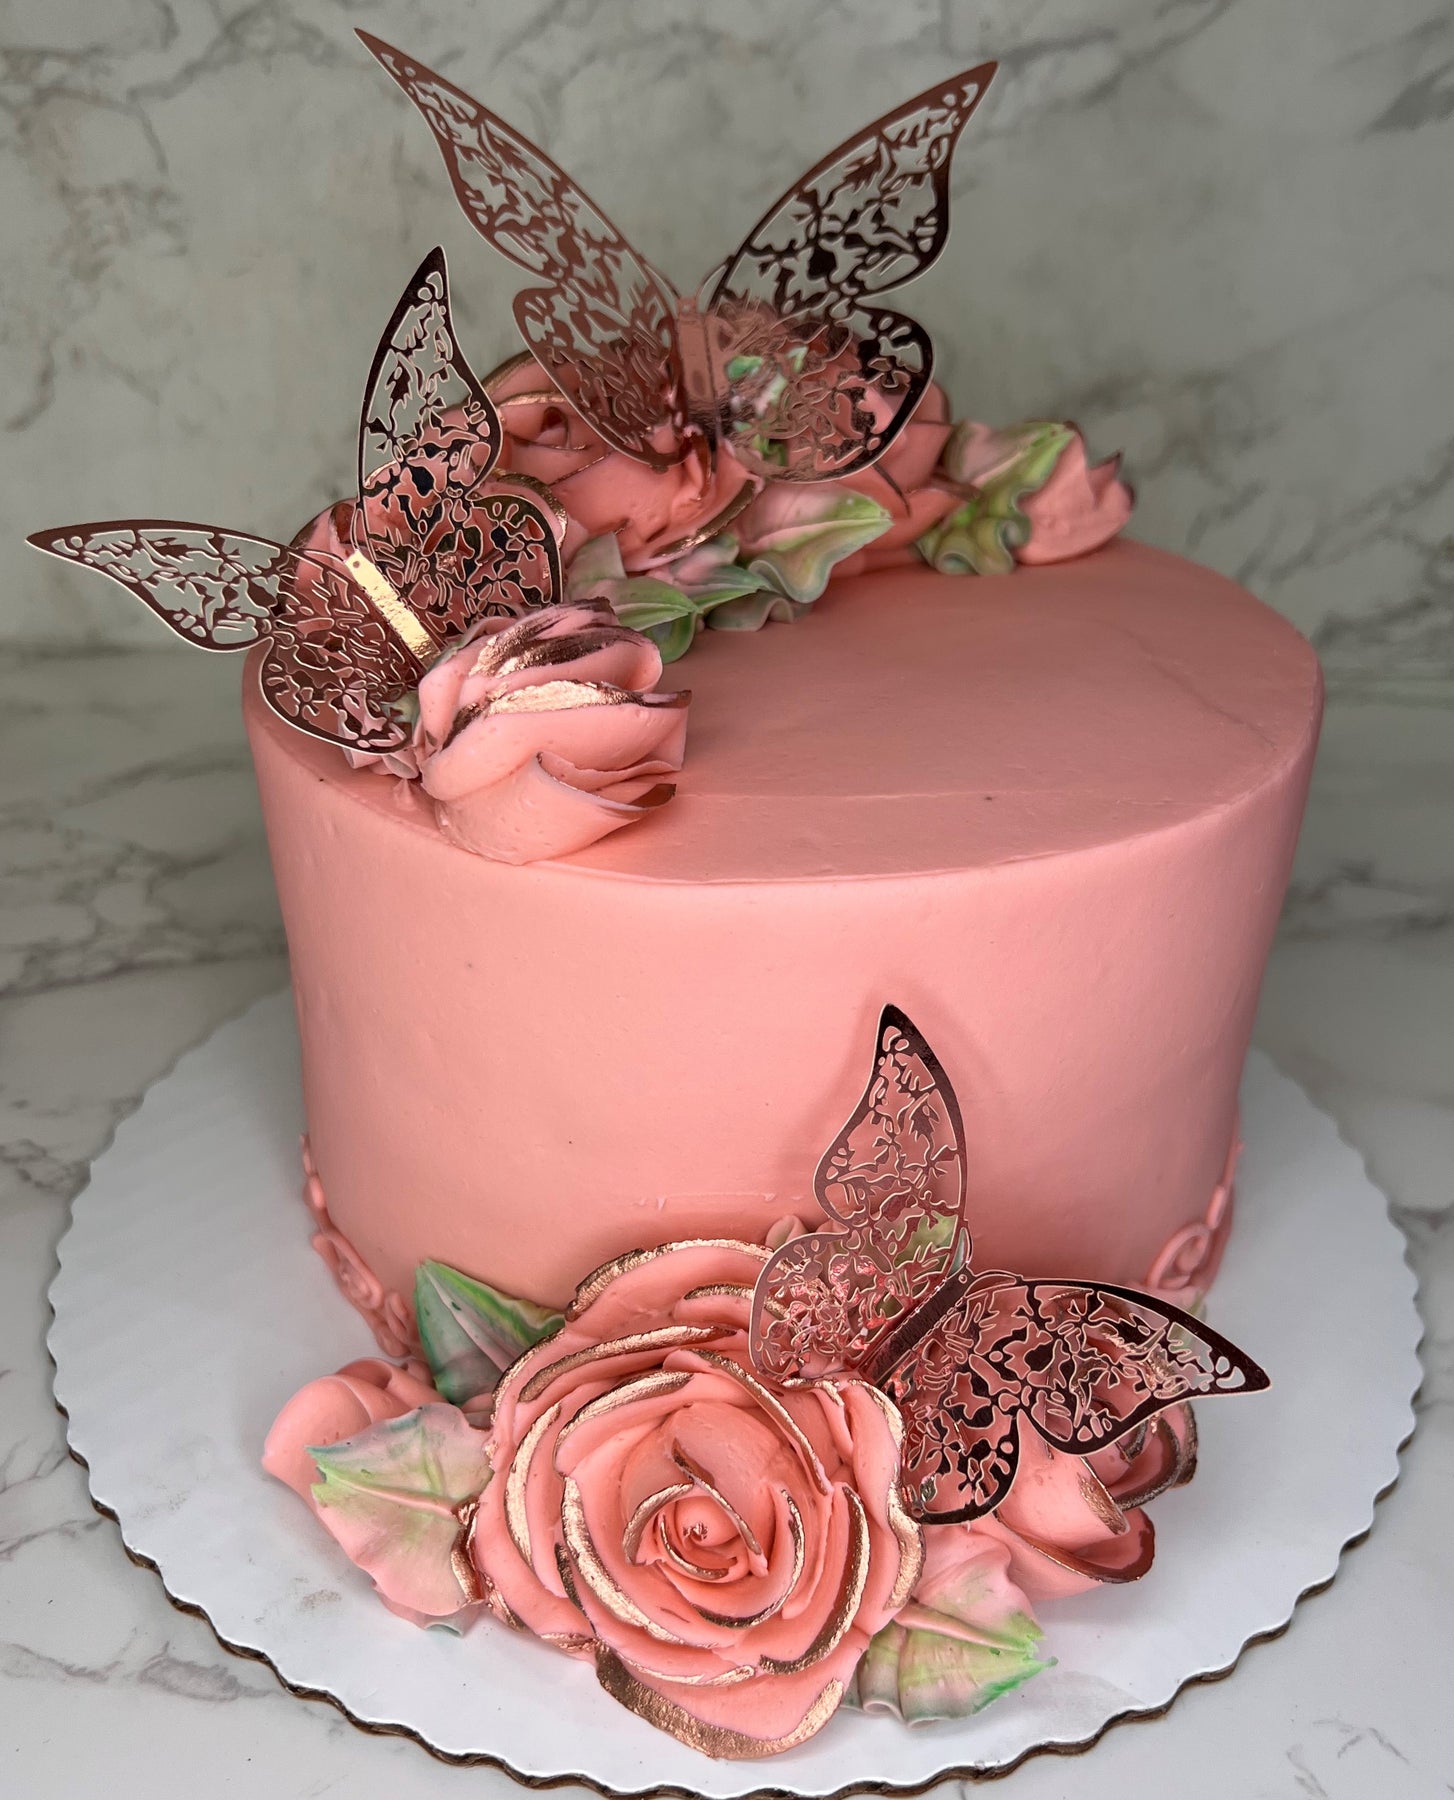 Pin by Gevlovemar on Идеи на день рождения  Butterfly birthday cakes,  Creative birthday cakes, Beautiful birthday cakes